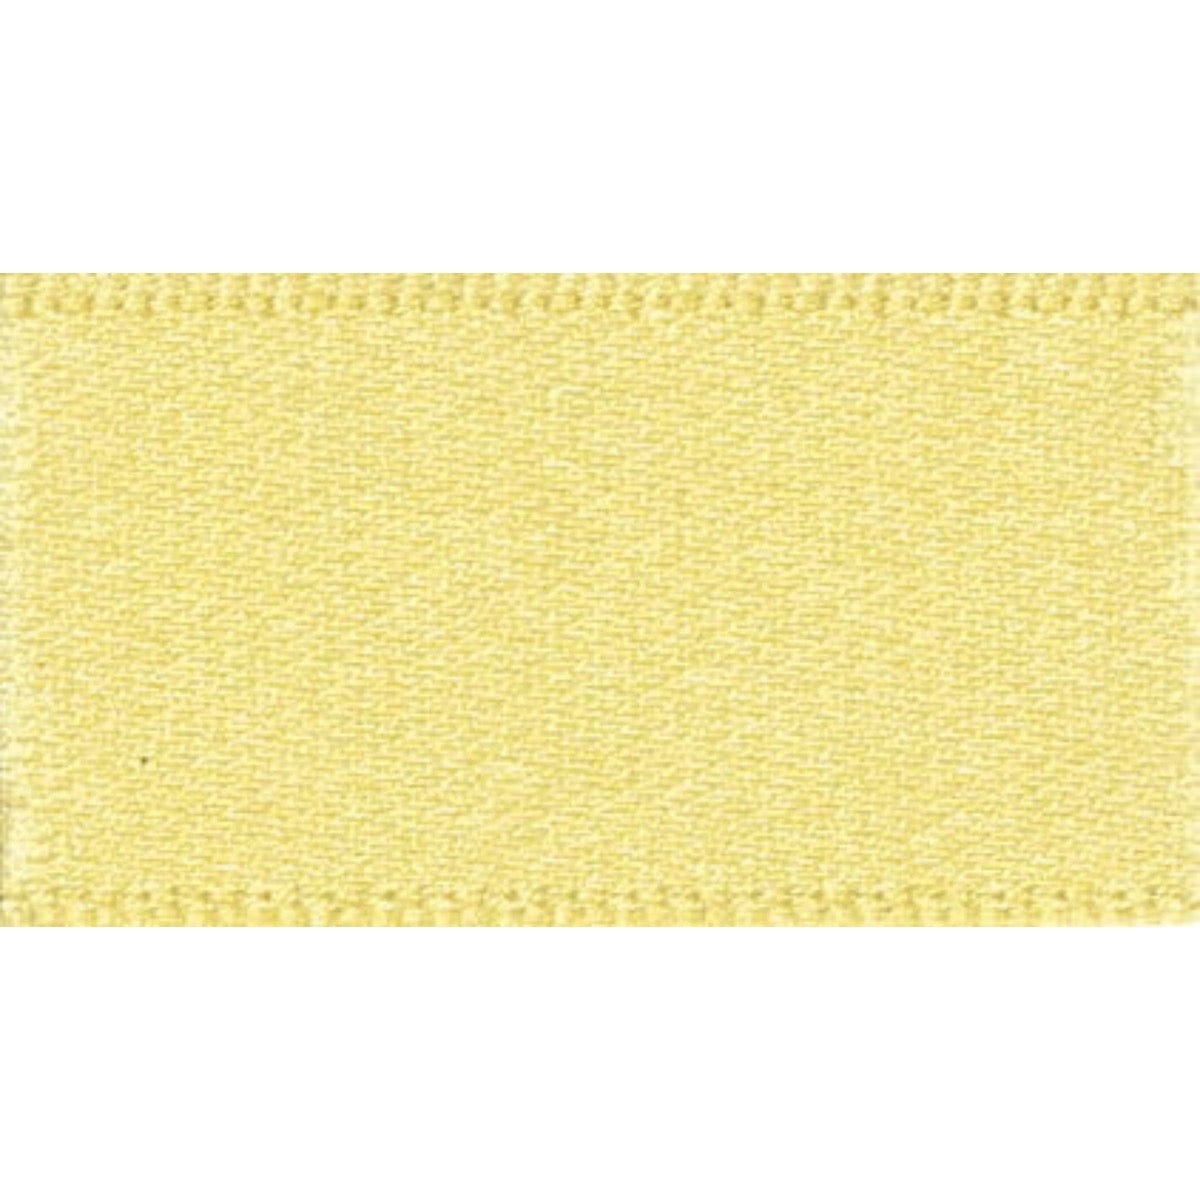 Double Faced Satin Ribbon Lemon Yellow: 3mm wide. Price per metre.